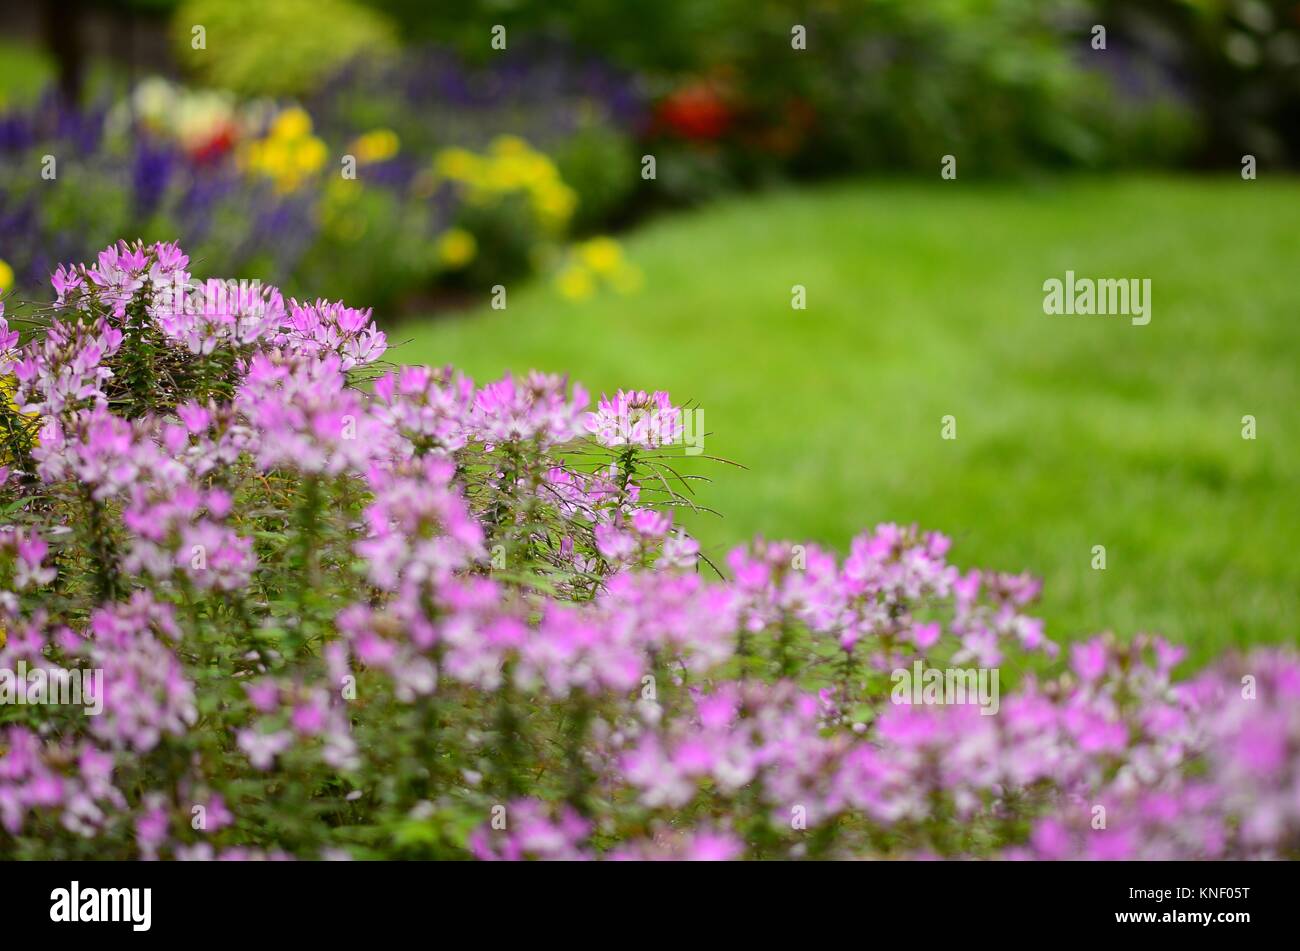 Cleome flowers in very soft focus highlight the flower garden, Pennsylvania, USA. Stock Photo